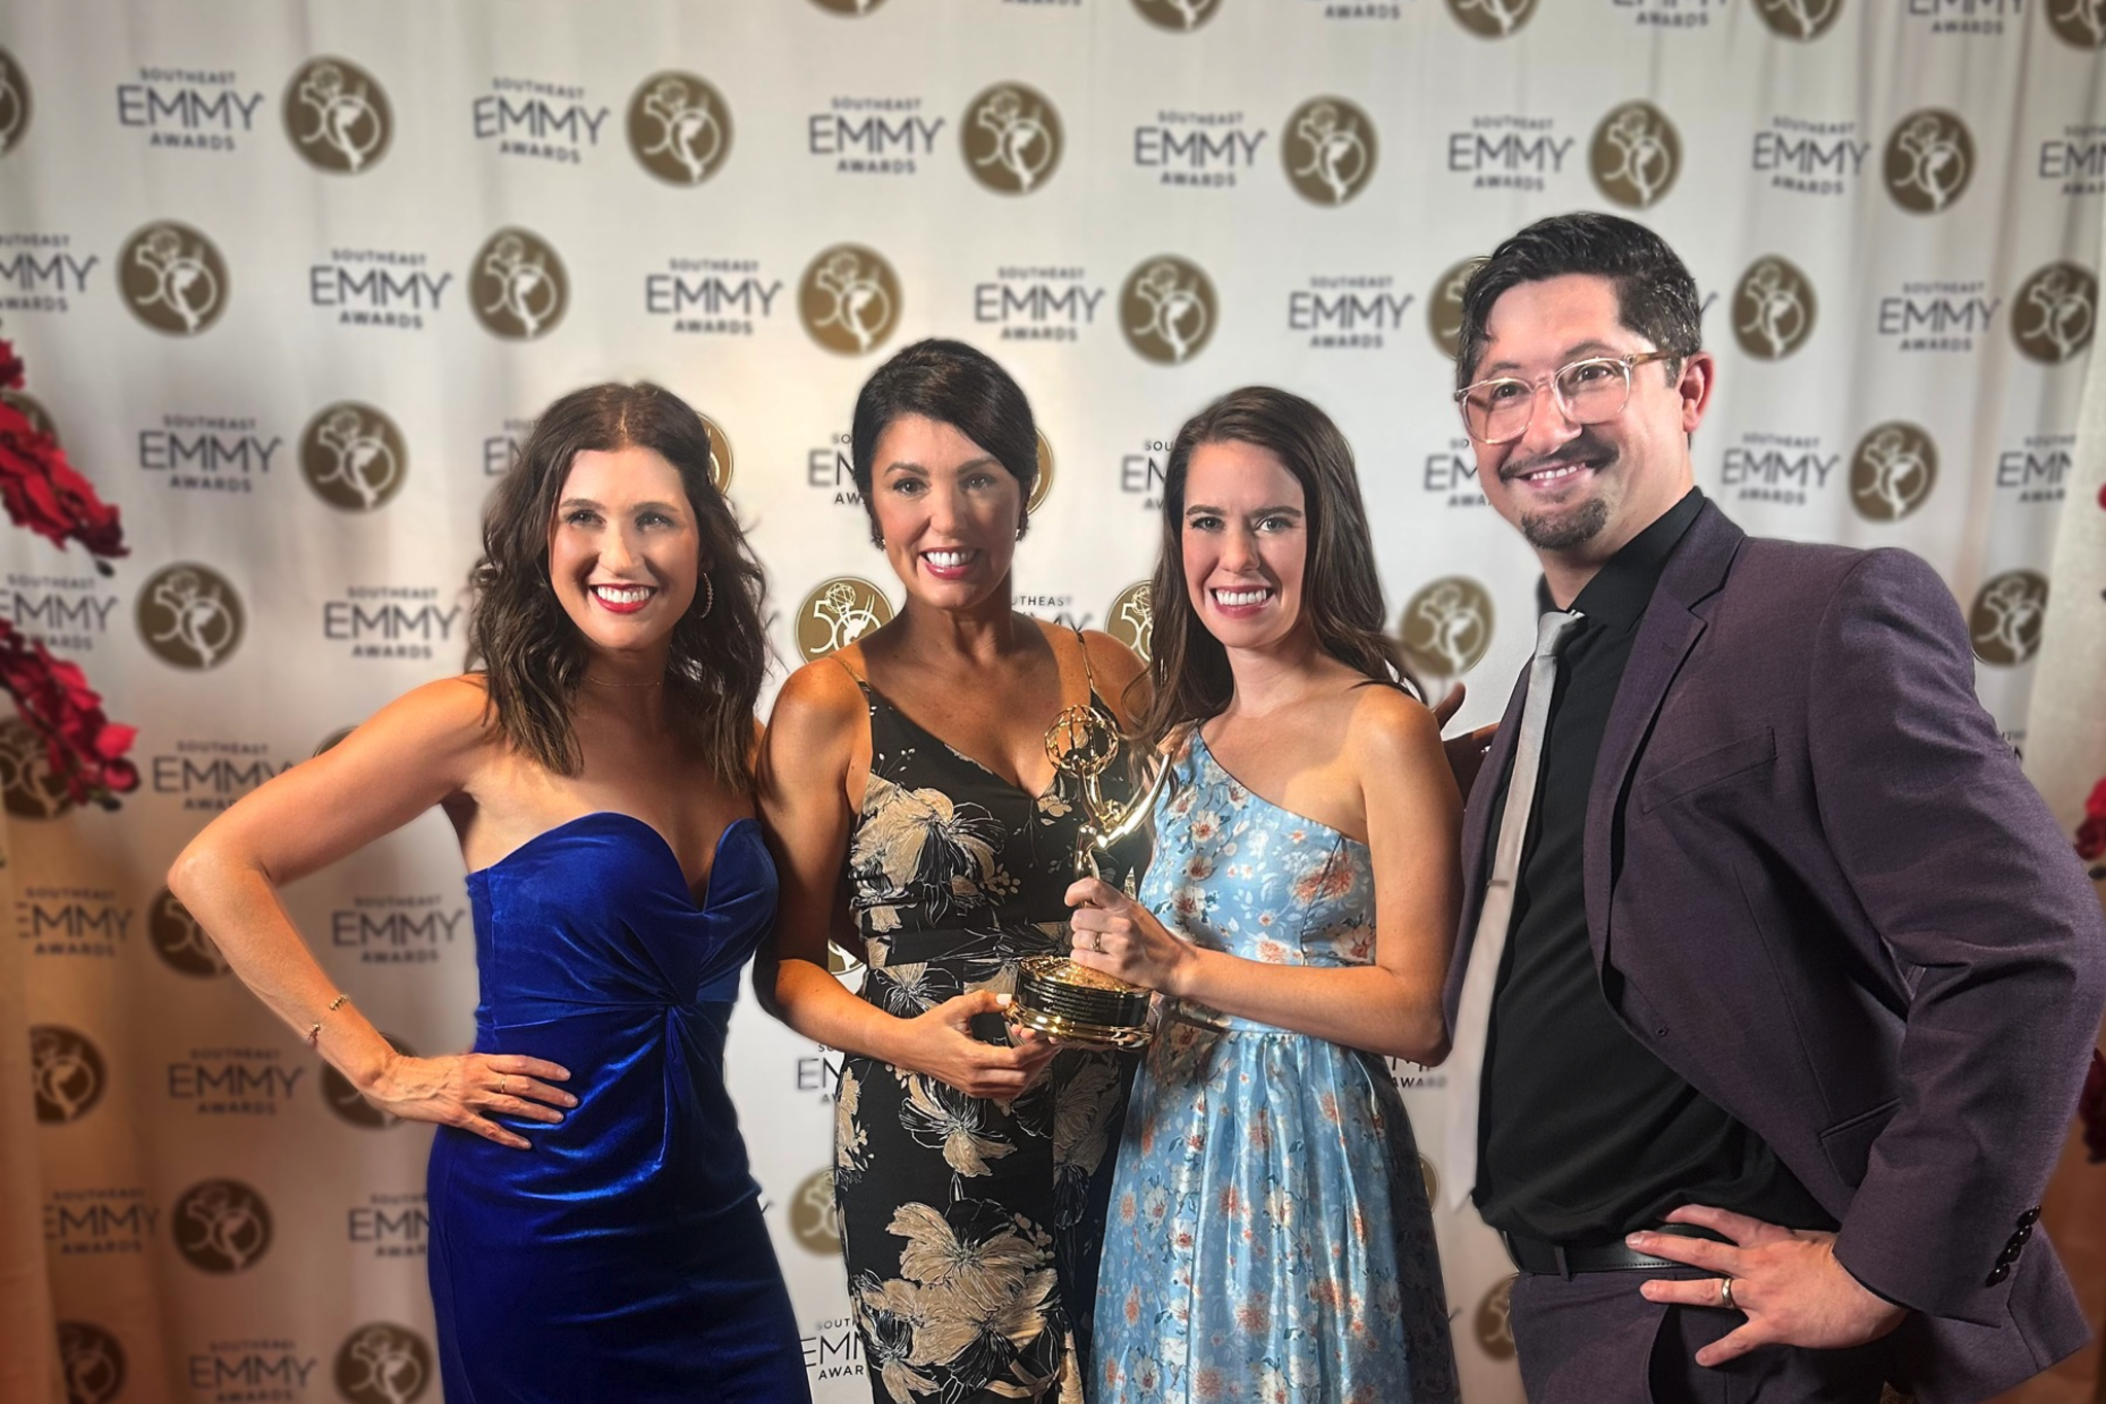 GPB staff holding an Emmy award